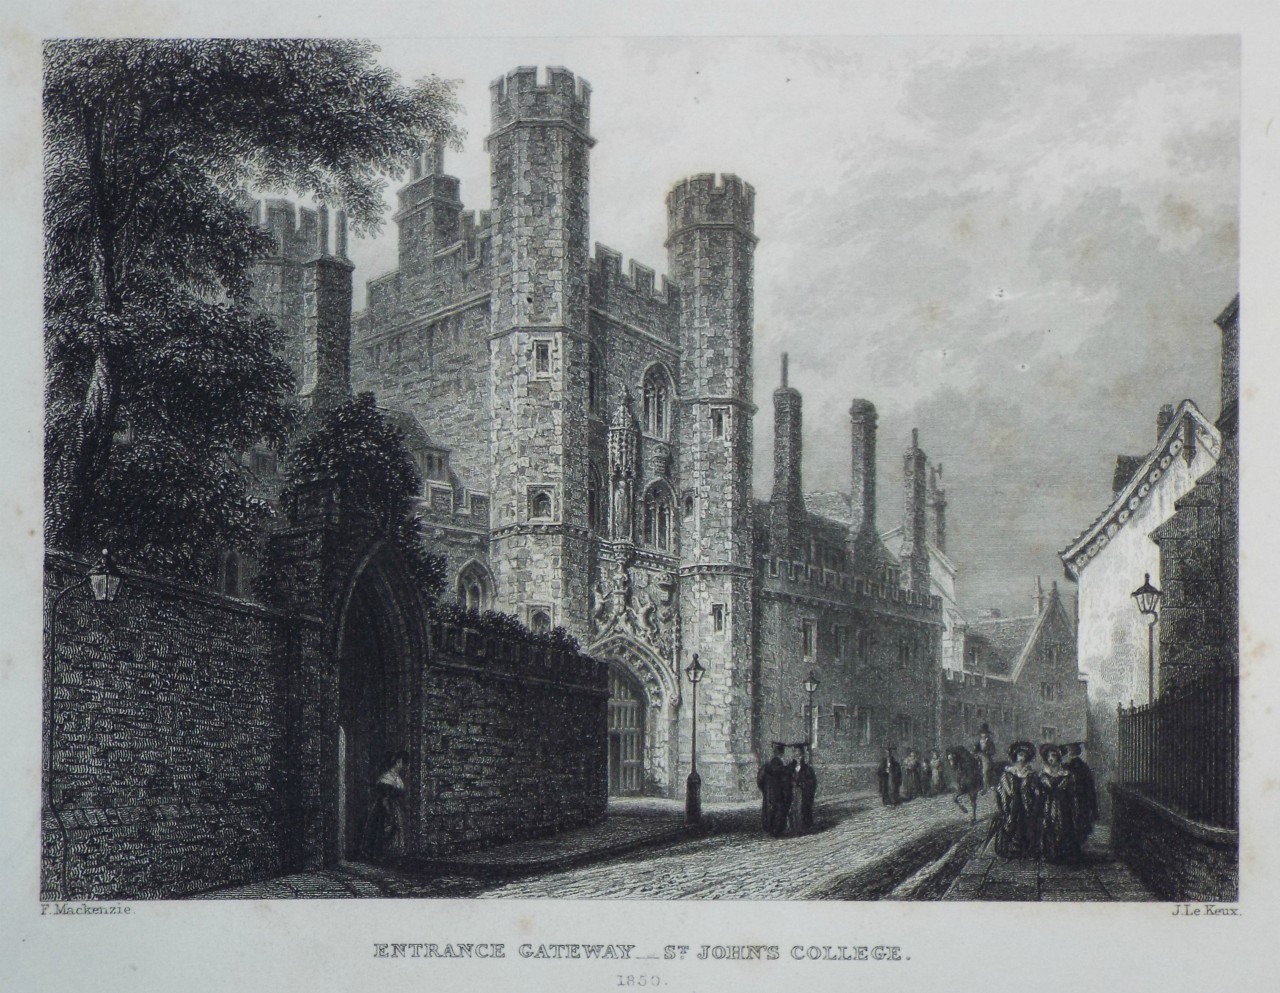 Print - Entrance Gateway St. John's College. 1850. - Le